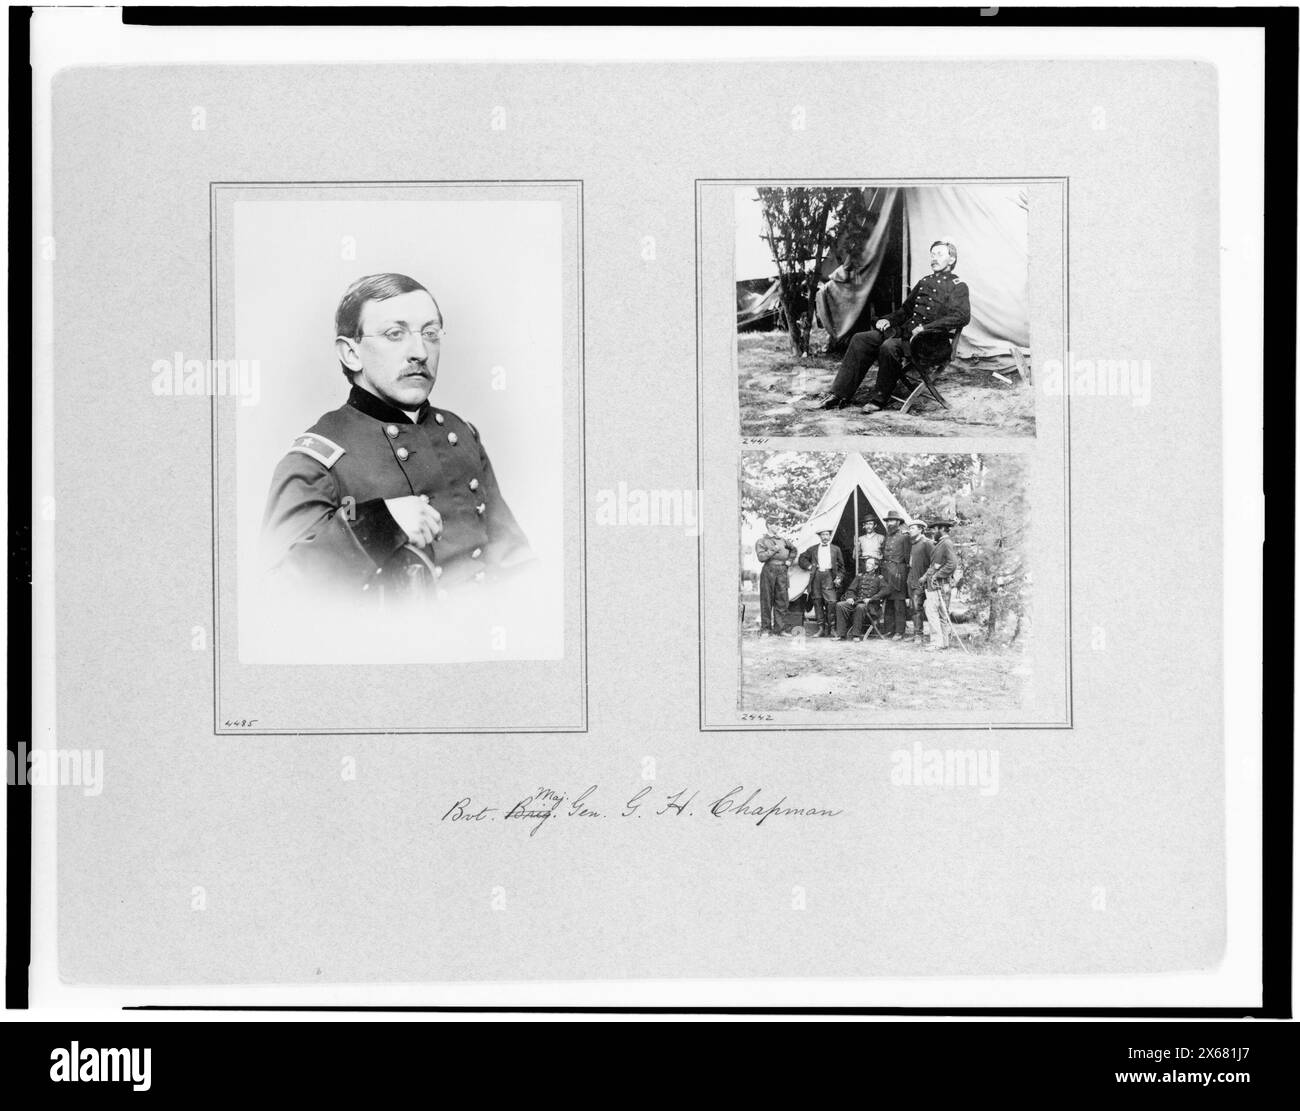 Bvt. Maj. Gen. G. H. Chapman, Civil War Photographs 1861-1865 Stock Photo